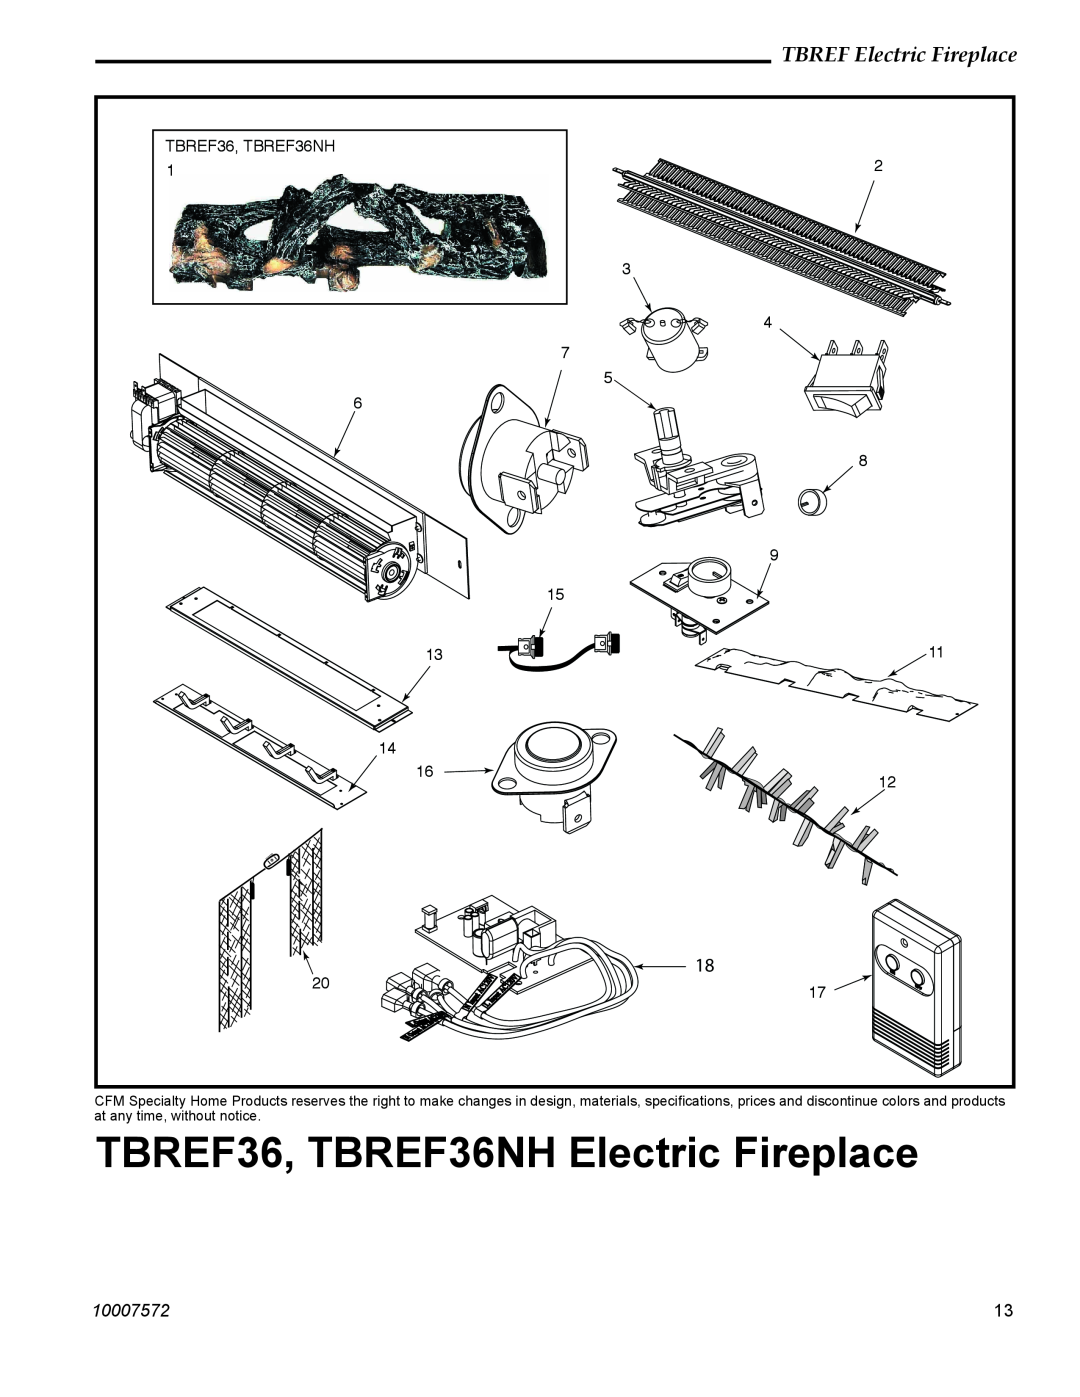 Vermont Casting manual TBREF36, TBREF36NH Electric Fireplace, TBREF Electric Fireplace, 10007572, TBREF36, TBREF36NH 3 